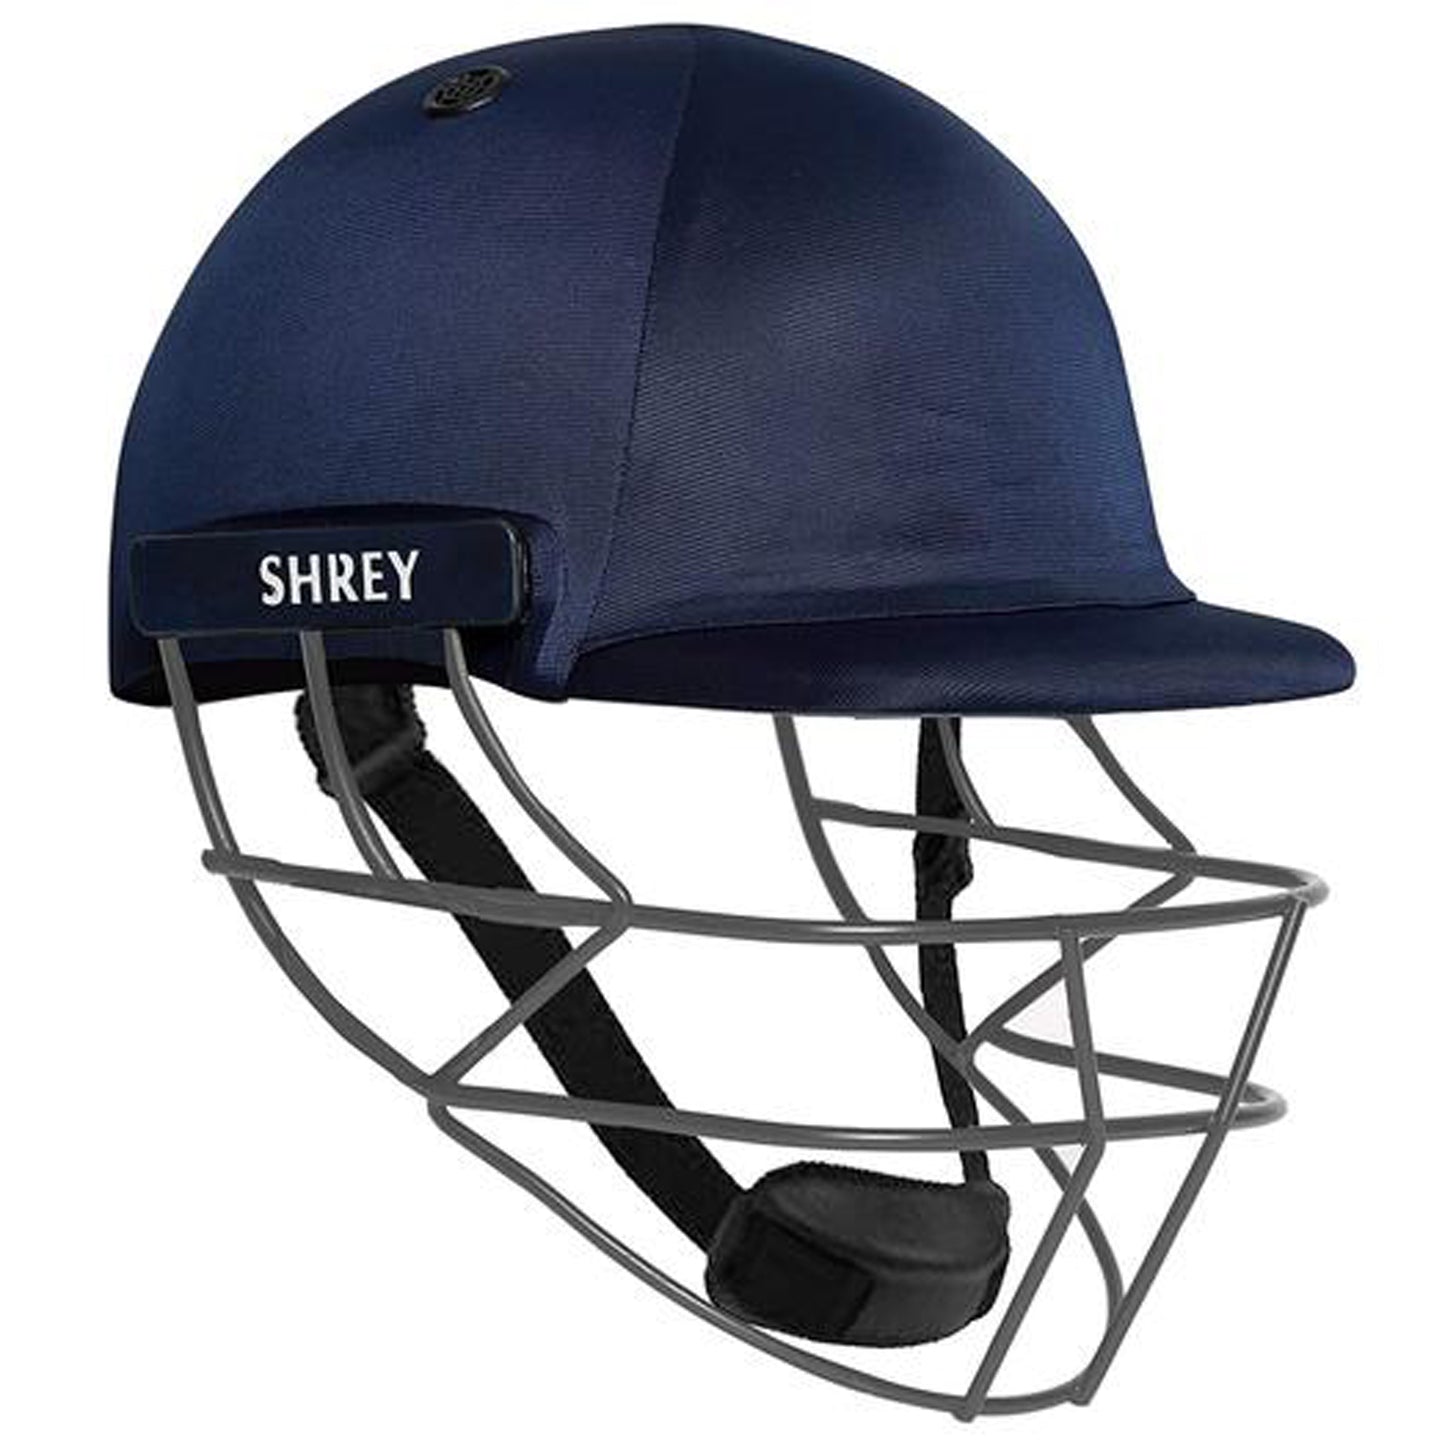 Shrey Performance Mild Steel Visor Cricket Helmet, Men's (Navy Blue) - Best Price online Prokicksports.com